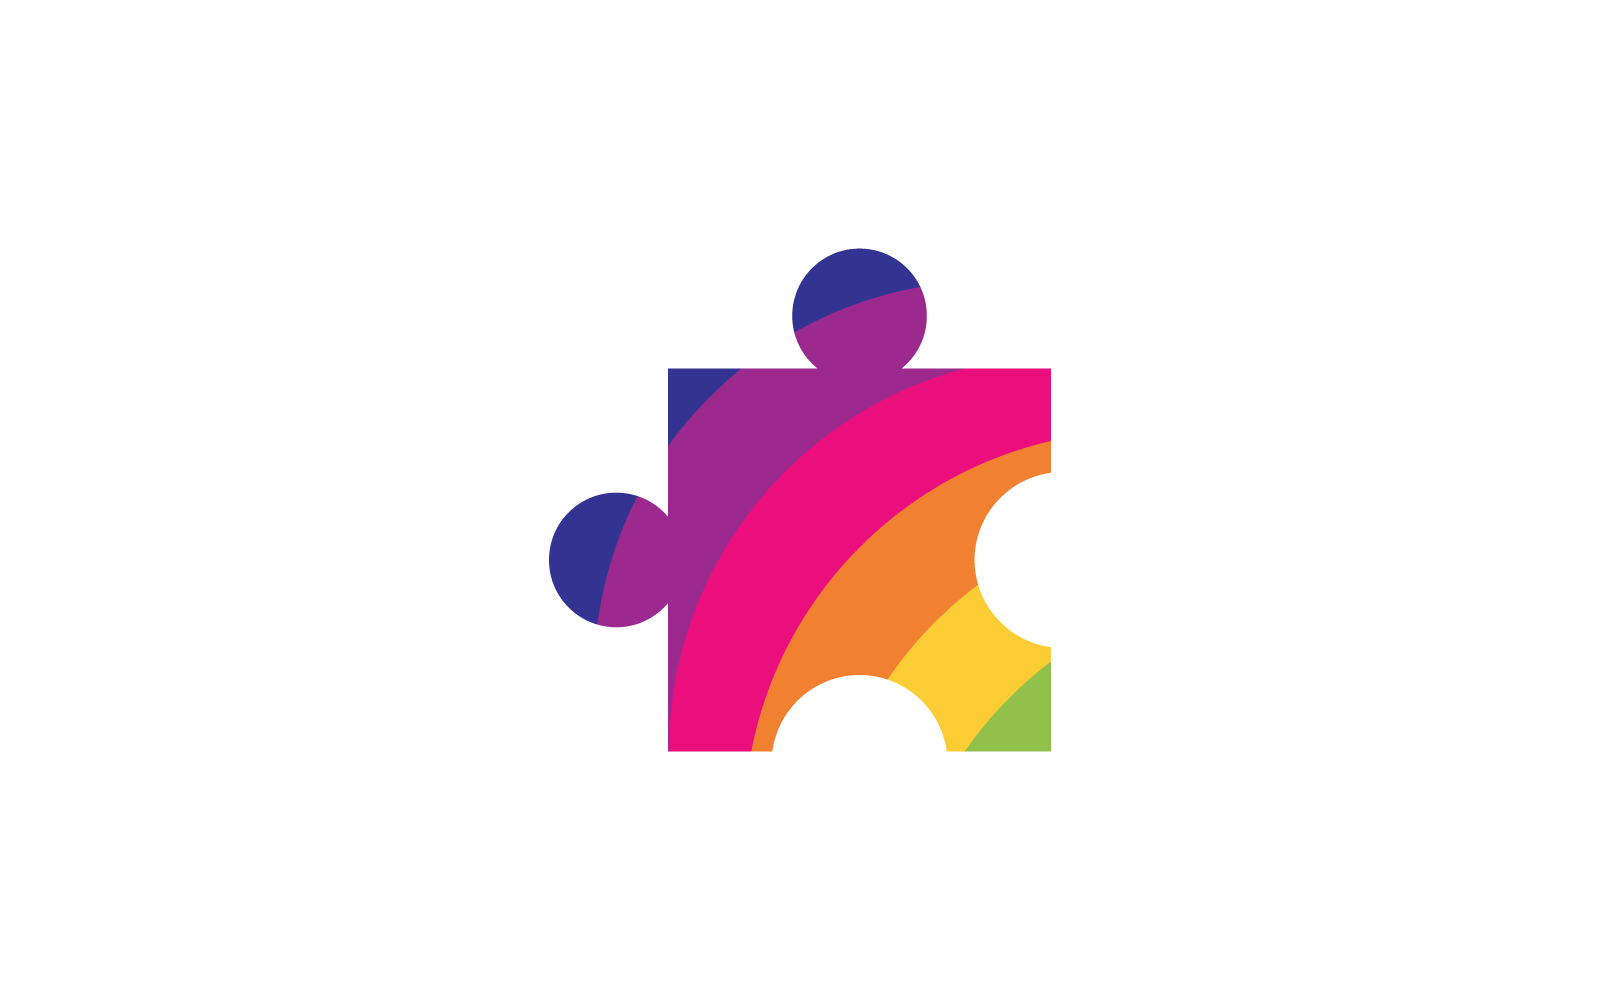 Disability logo, family care, or Community care logo template